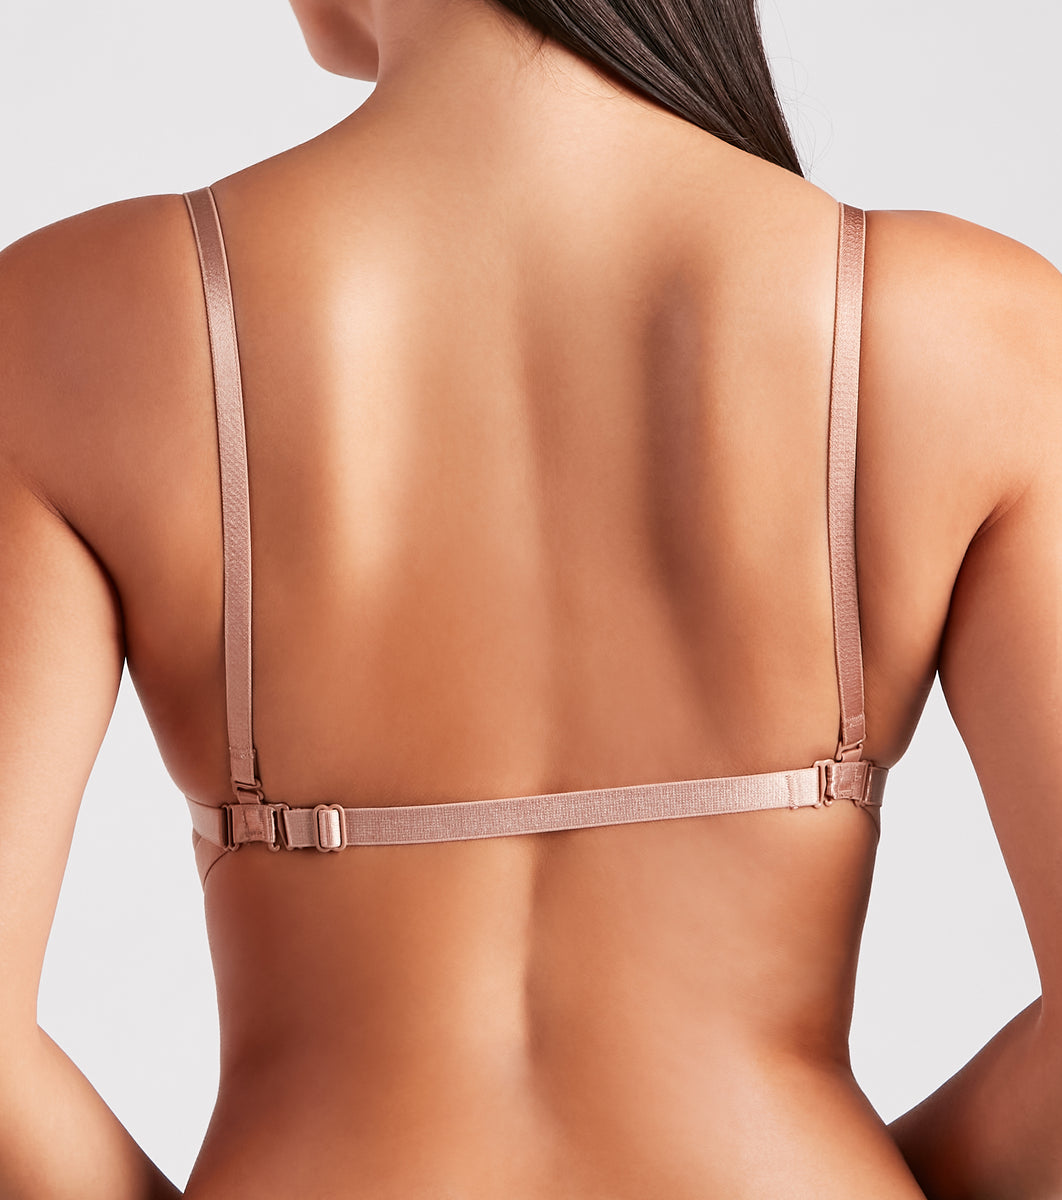 Women Cotton/Hosiery Non-Padded lower Back/Backless bra Single-Hook ,Low  Coverage,V-shap bra for women(Pack of 2)